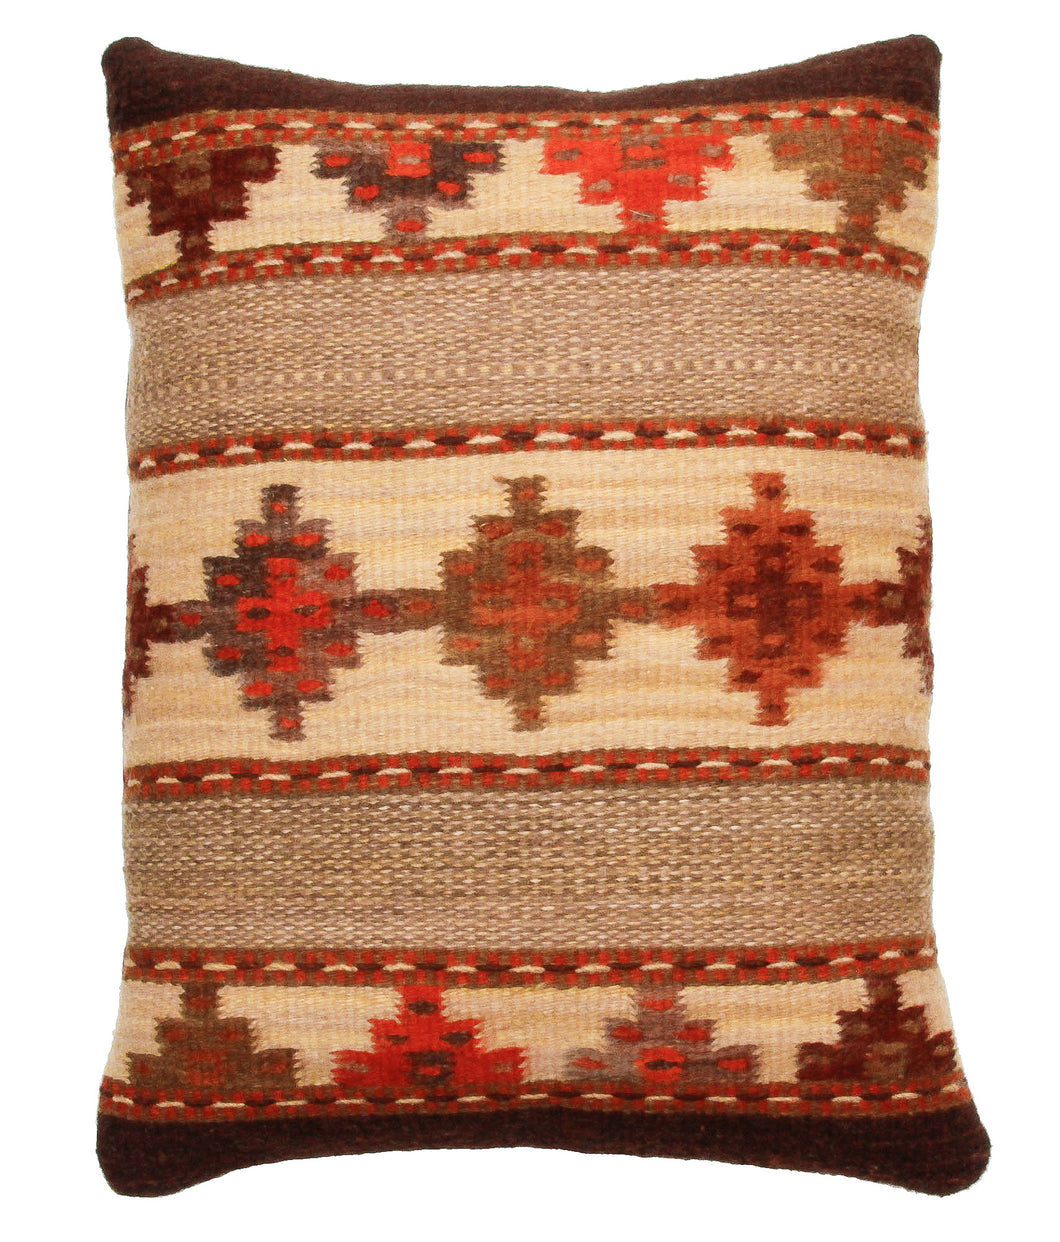 Handwoven Zapotec Indian Pillow - Yagul Wool Oaxacan Textile